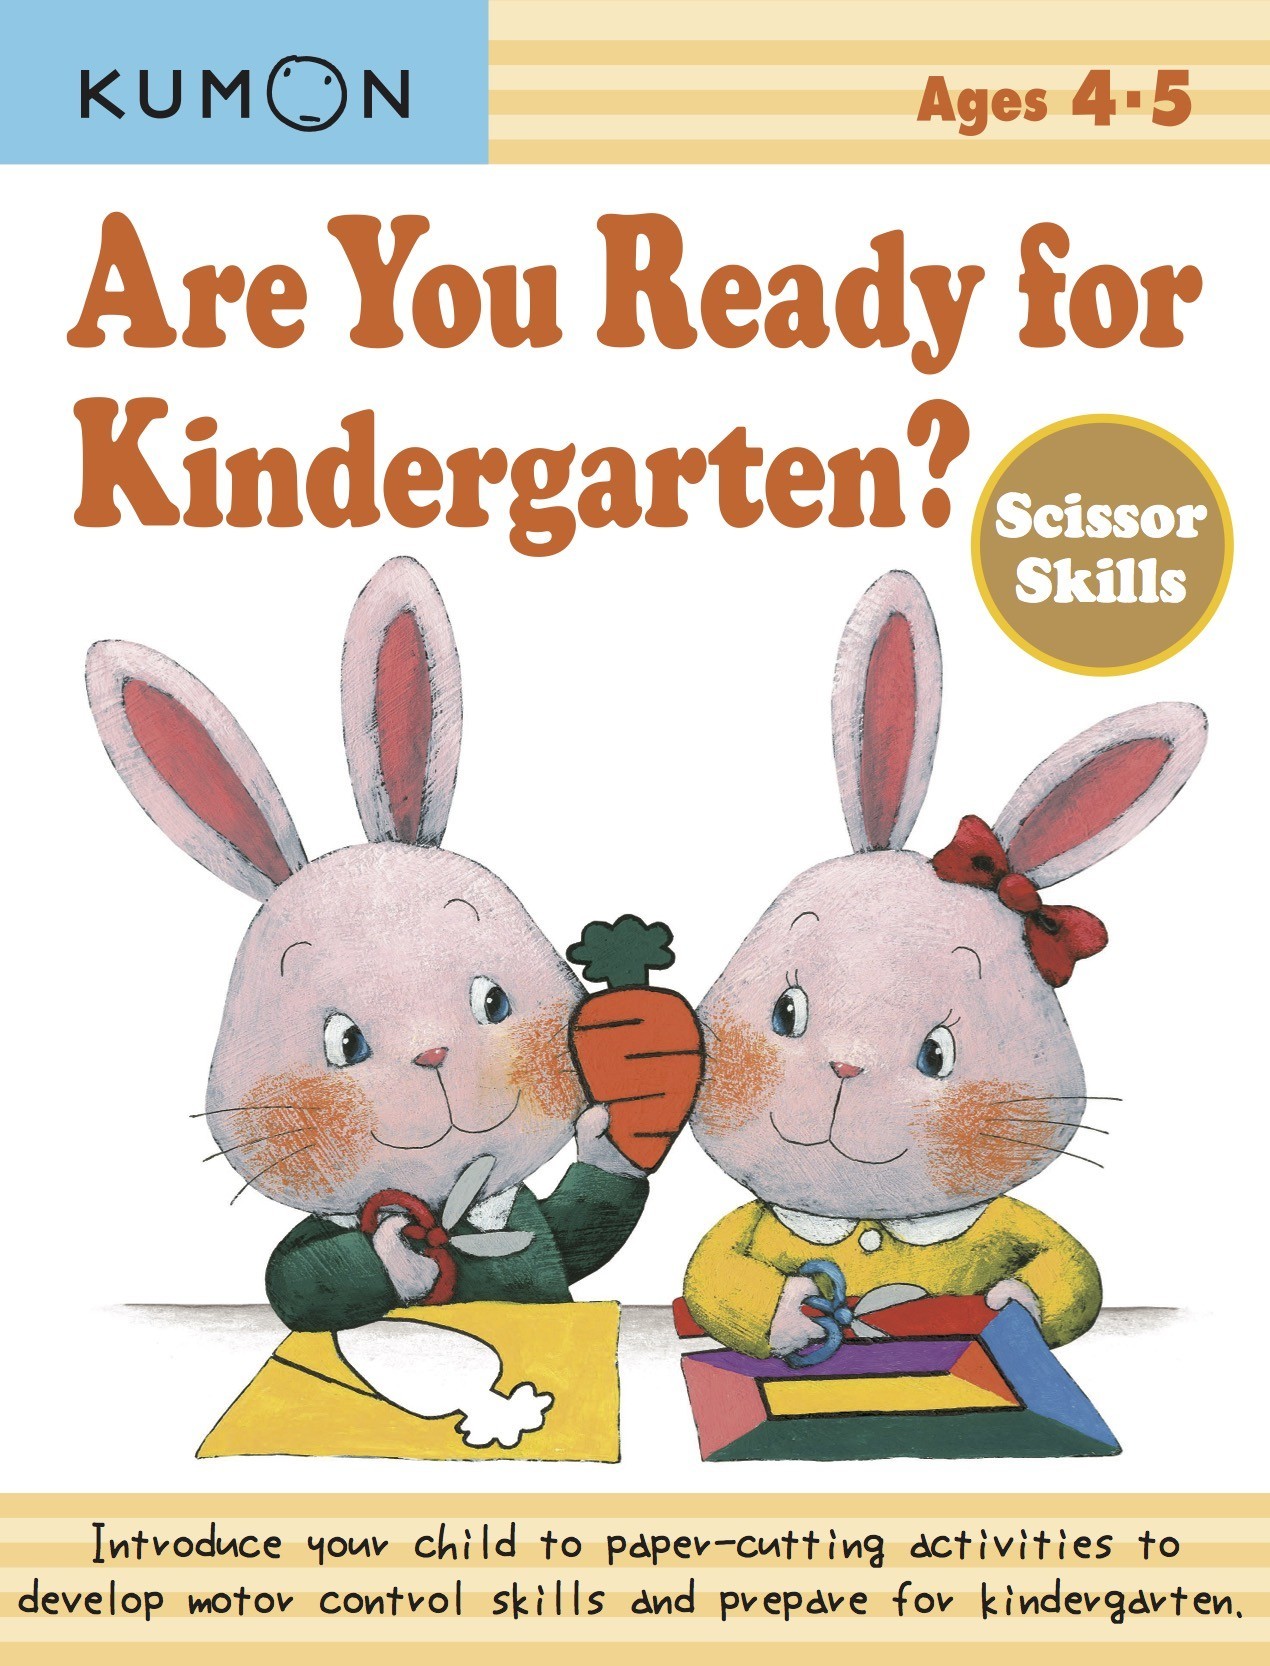 Kumon Are You Ready for Kindergarten? Scissor Skills